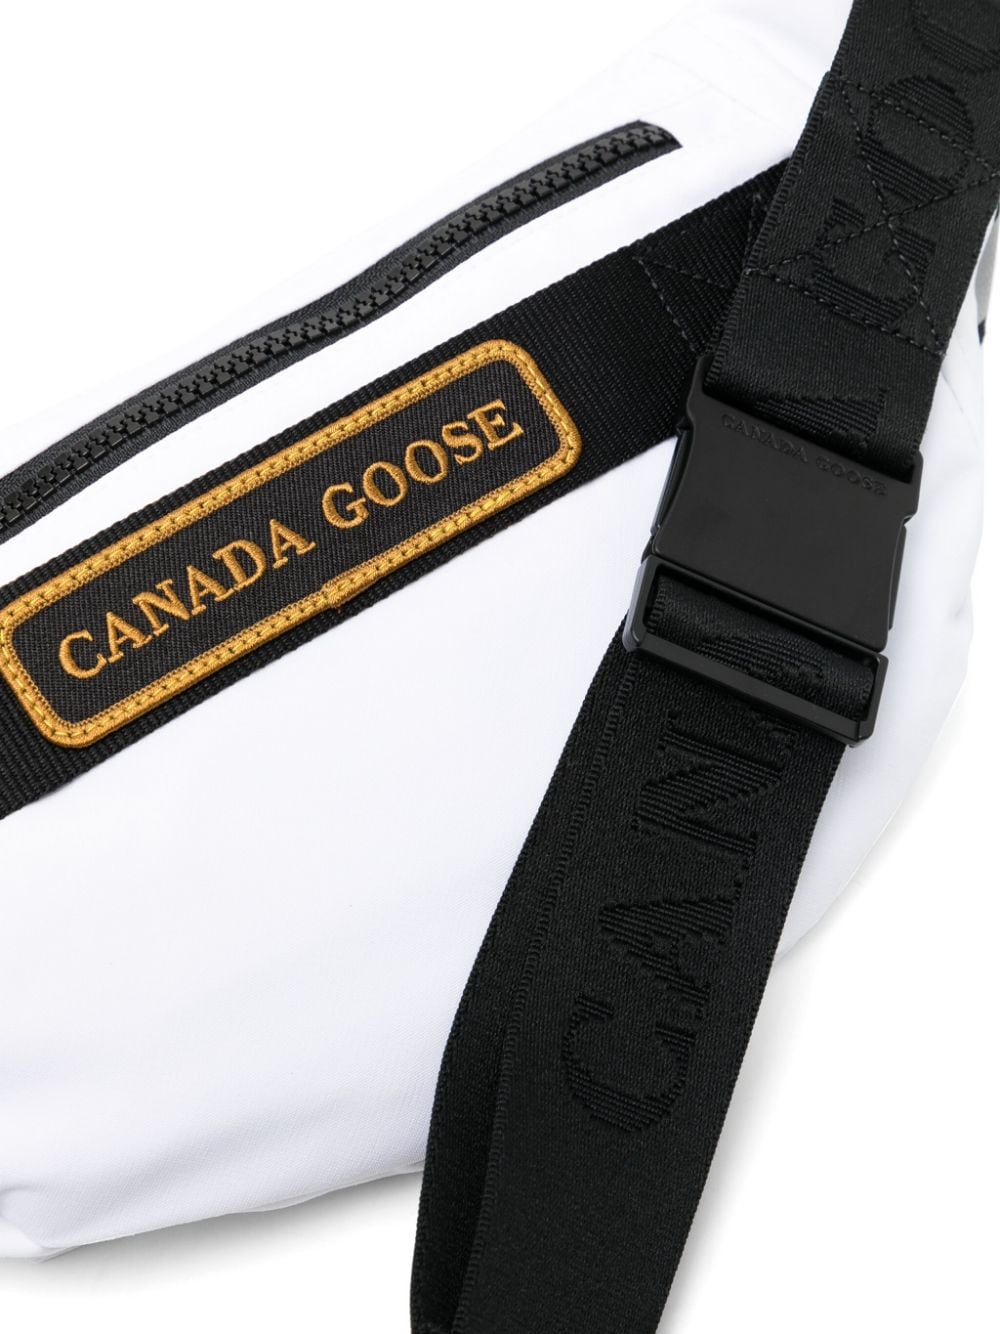 Shop Canada Goose Logo-appliqué Belt Bag In White